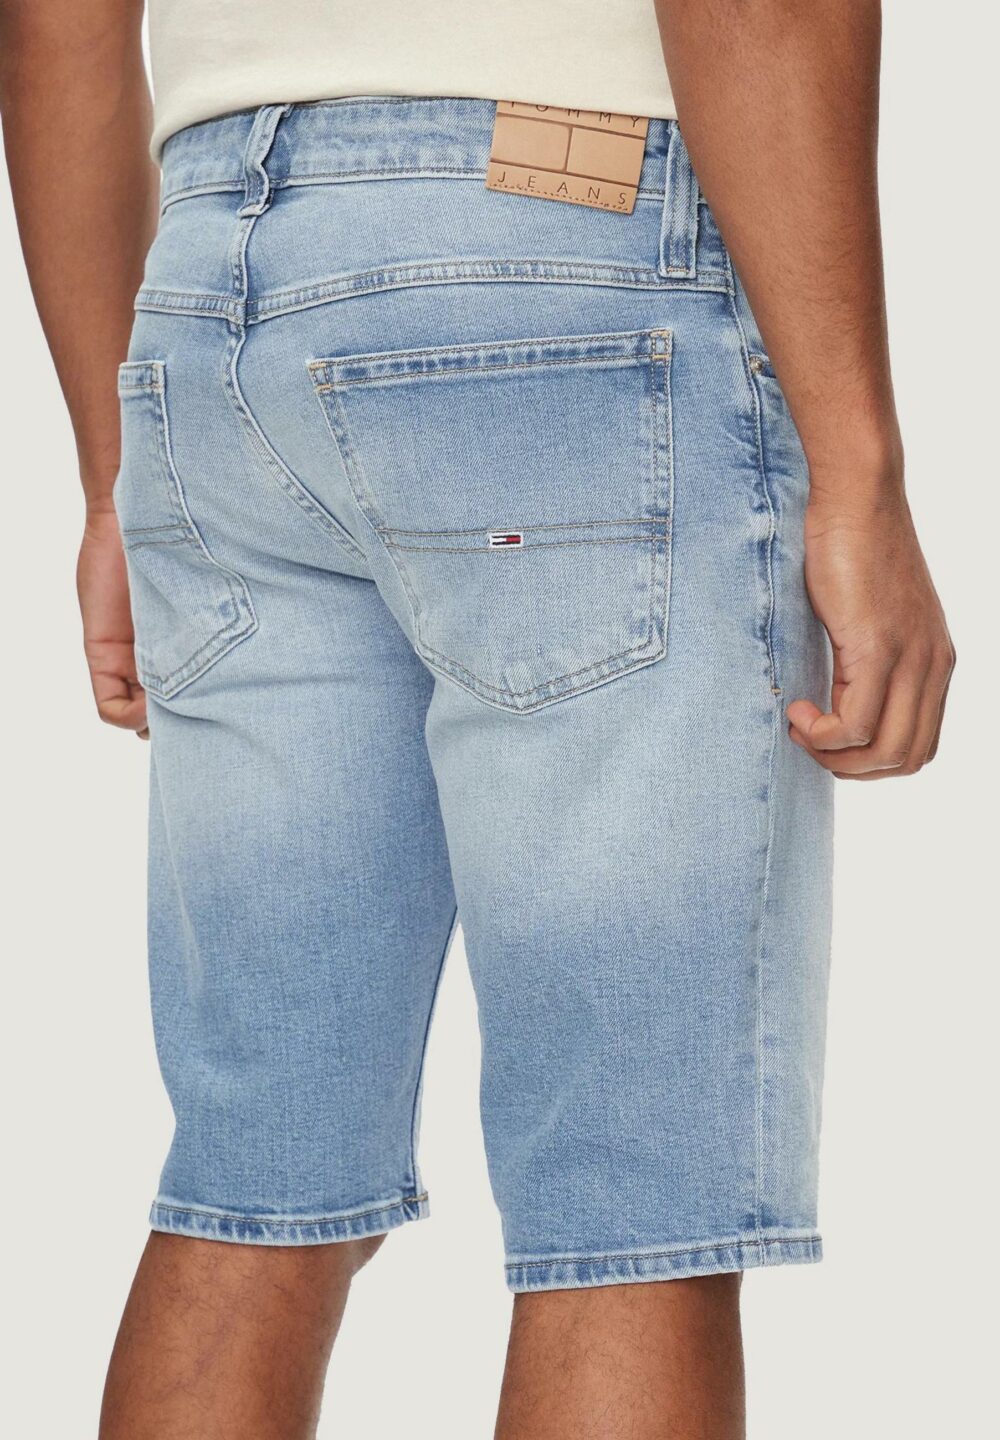 Bermuda Tommy Hilfiger Jeans IE BH0118 Denim chiaro - Foto 3